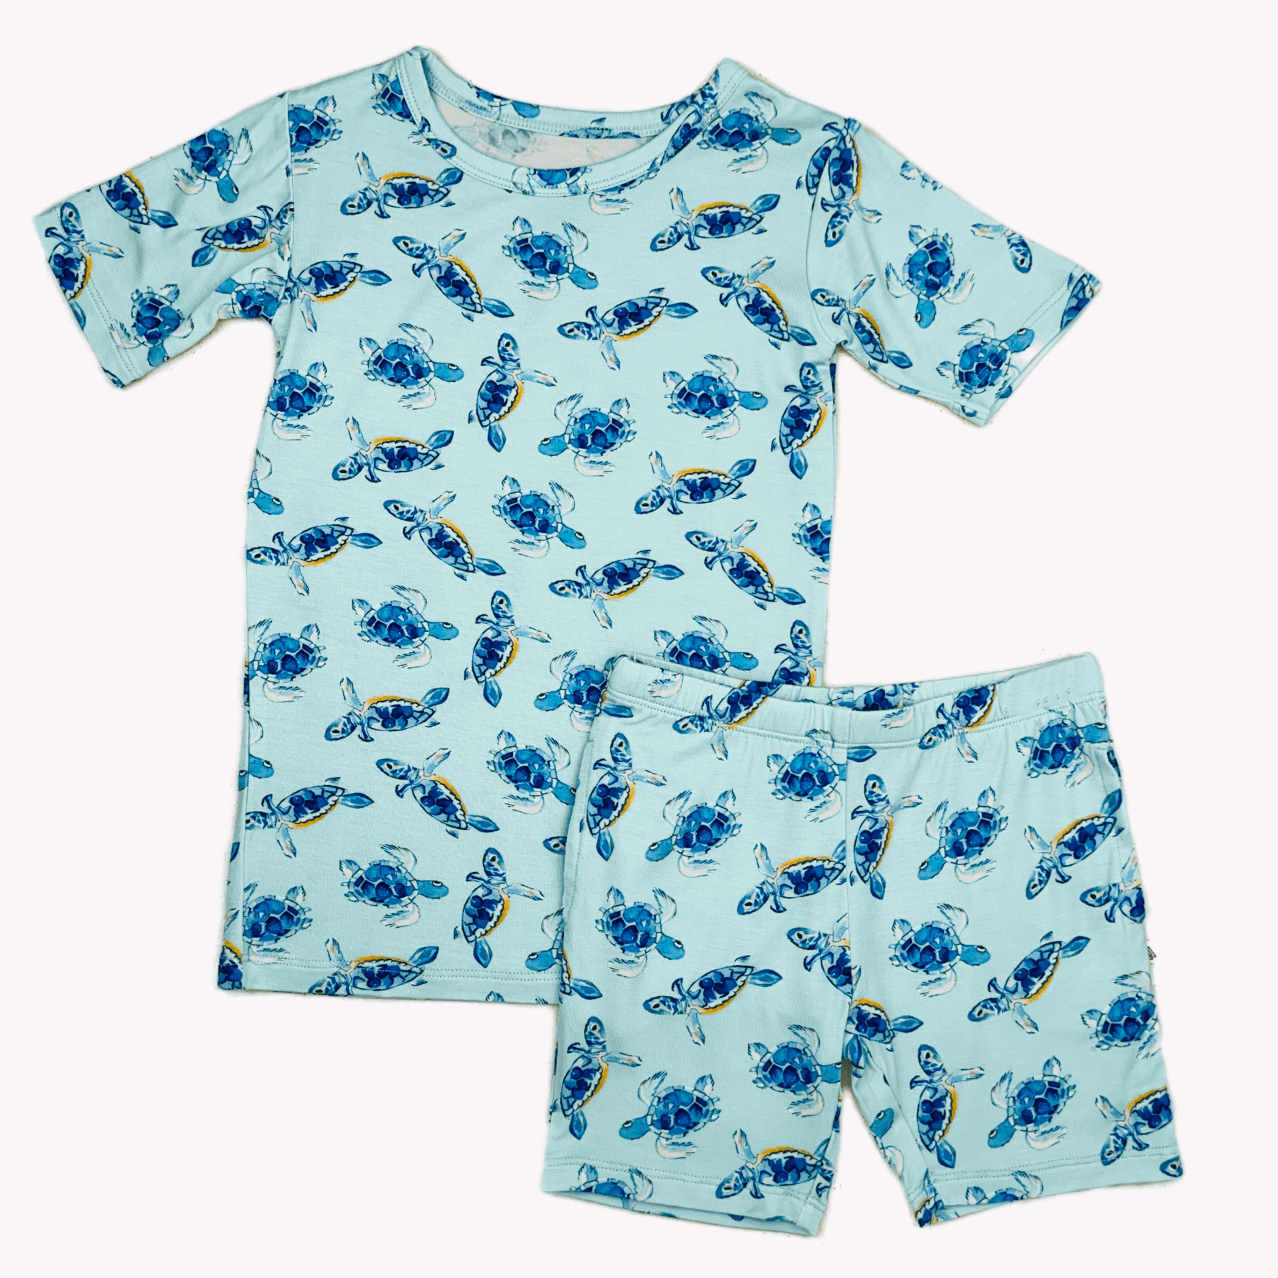 Baby Sea Turtles Short Sleeve/Shorts PJ Set